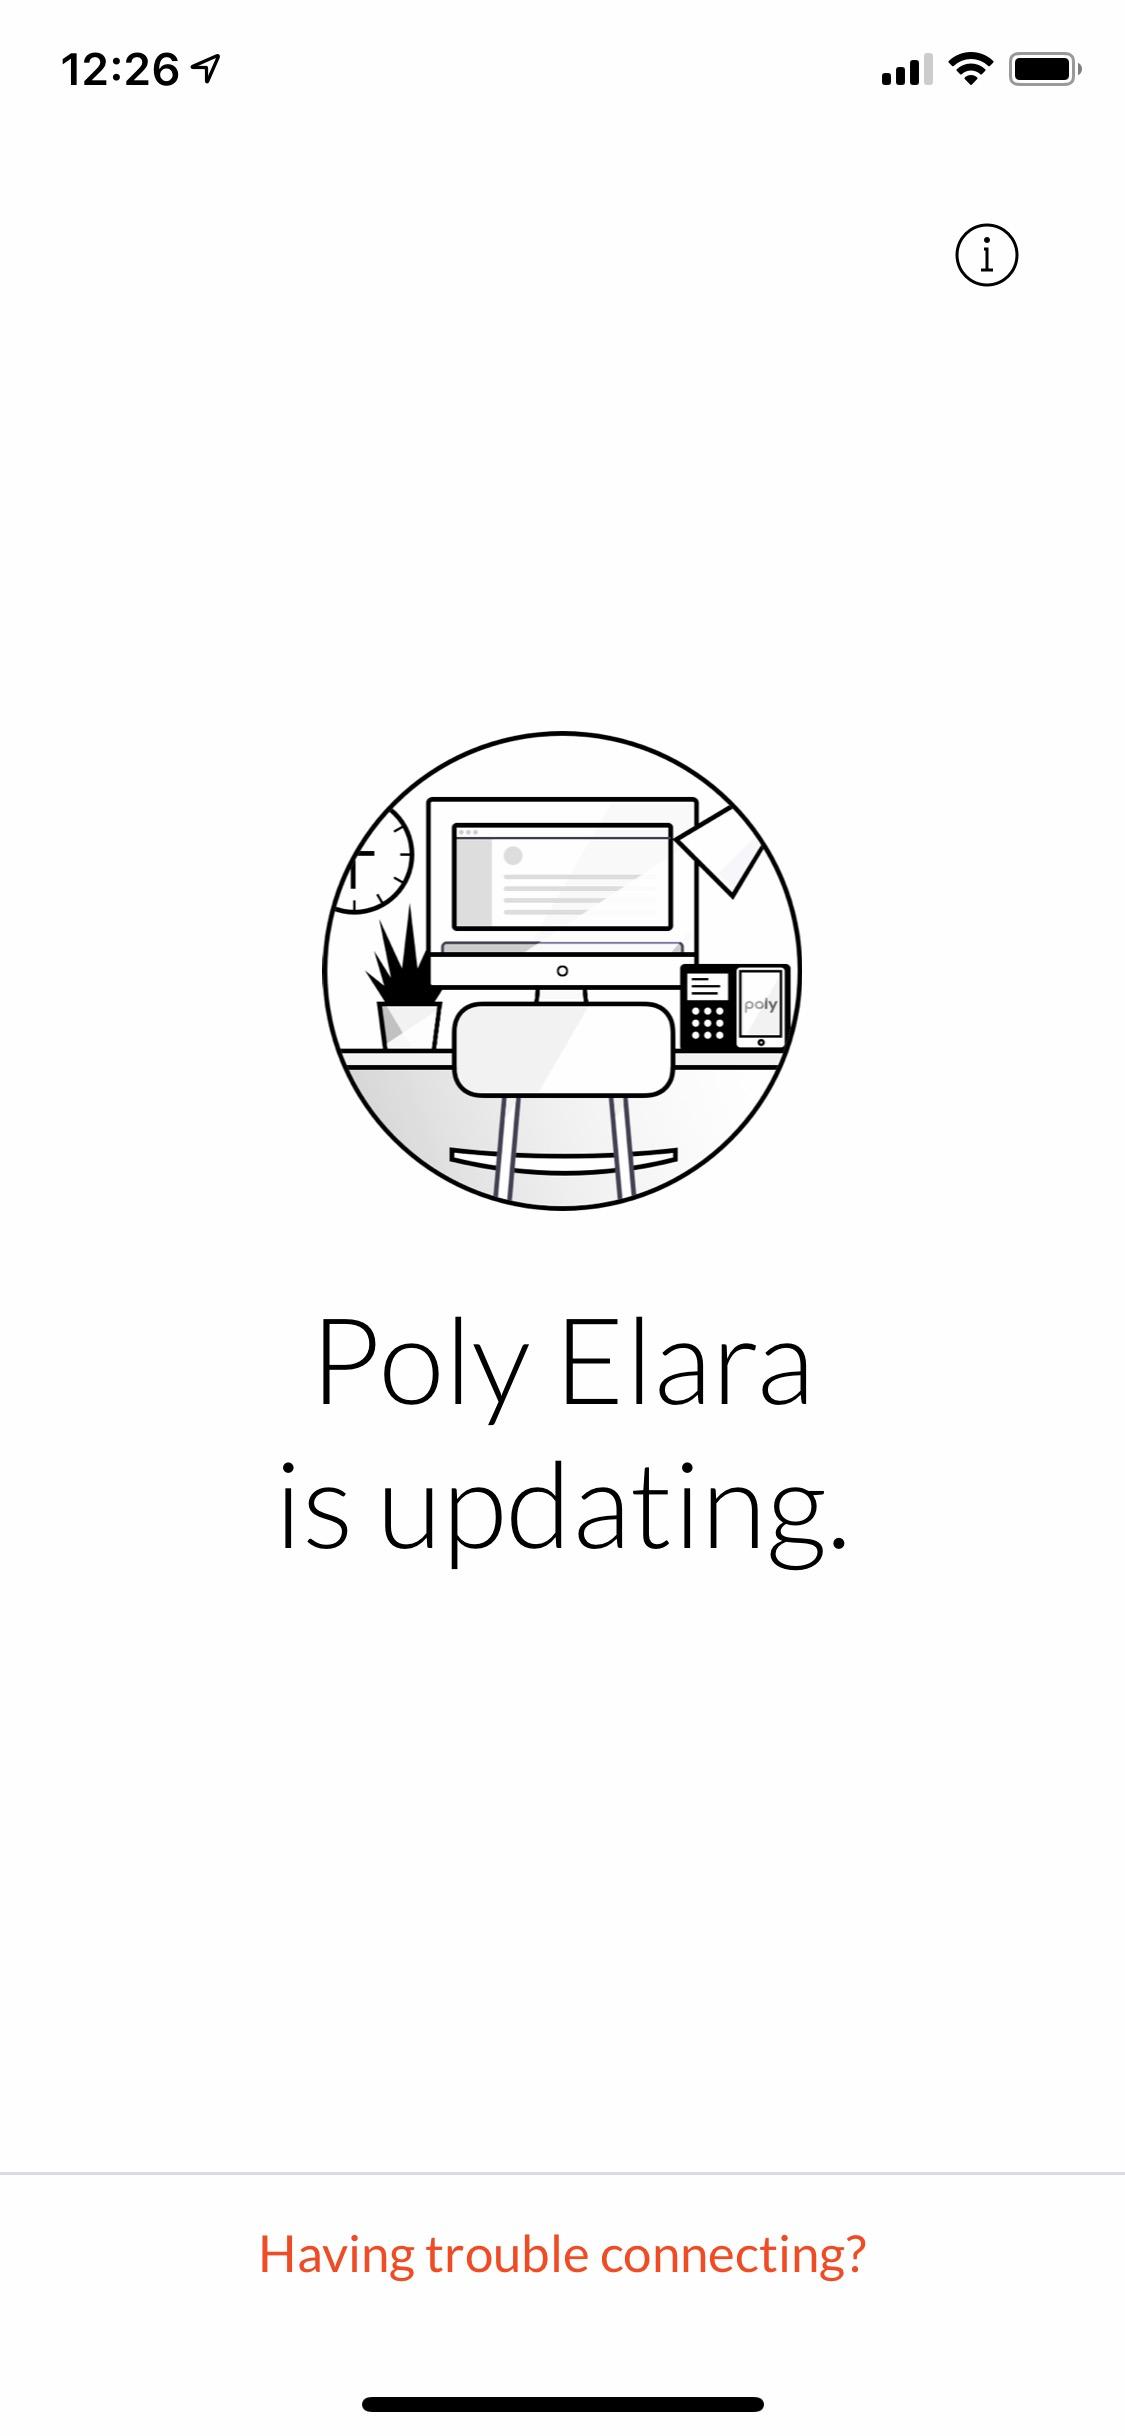 Poly Elara App Update process